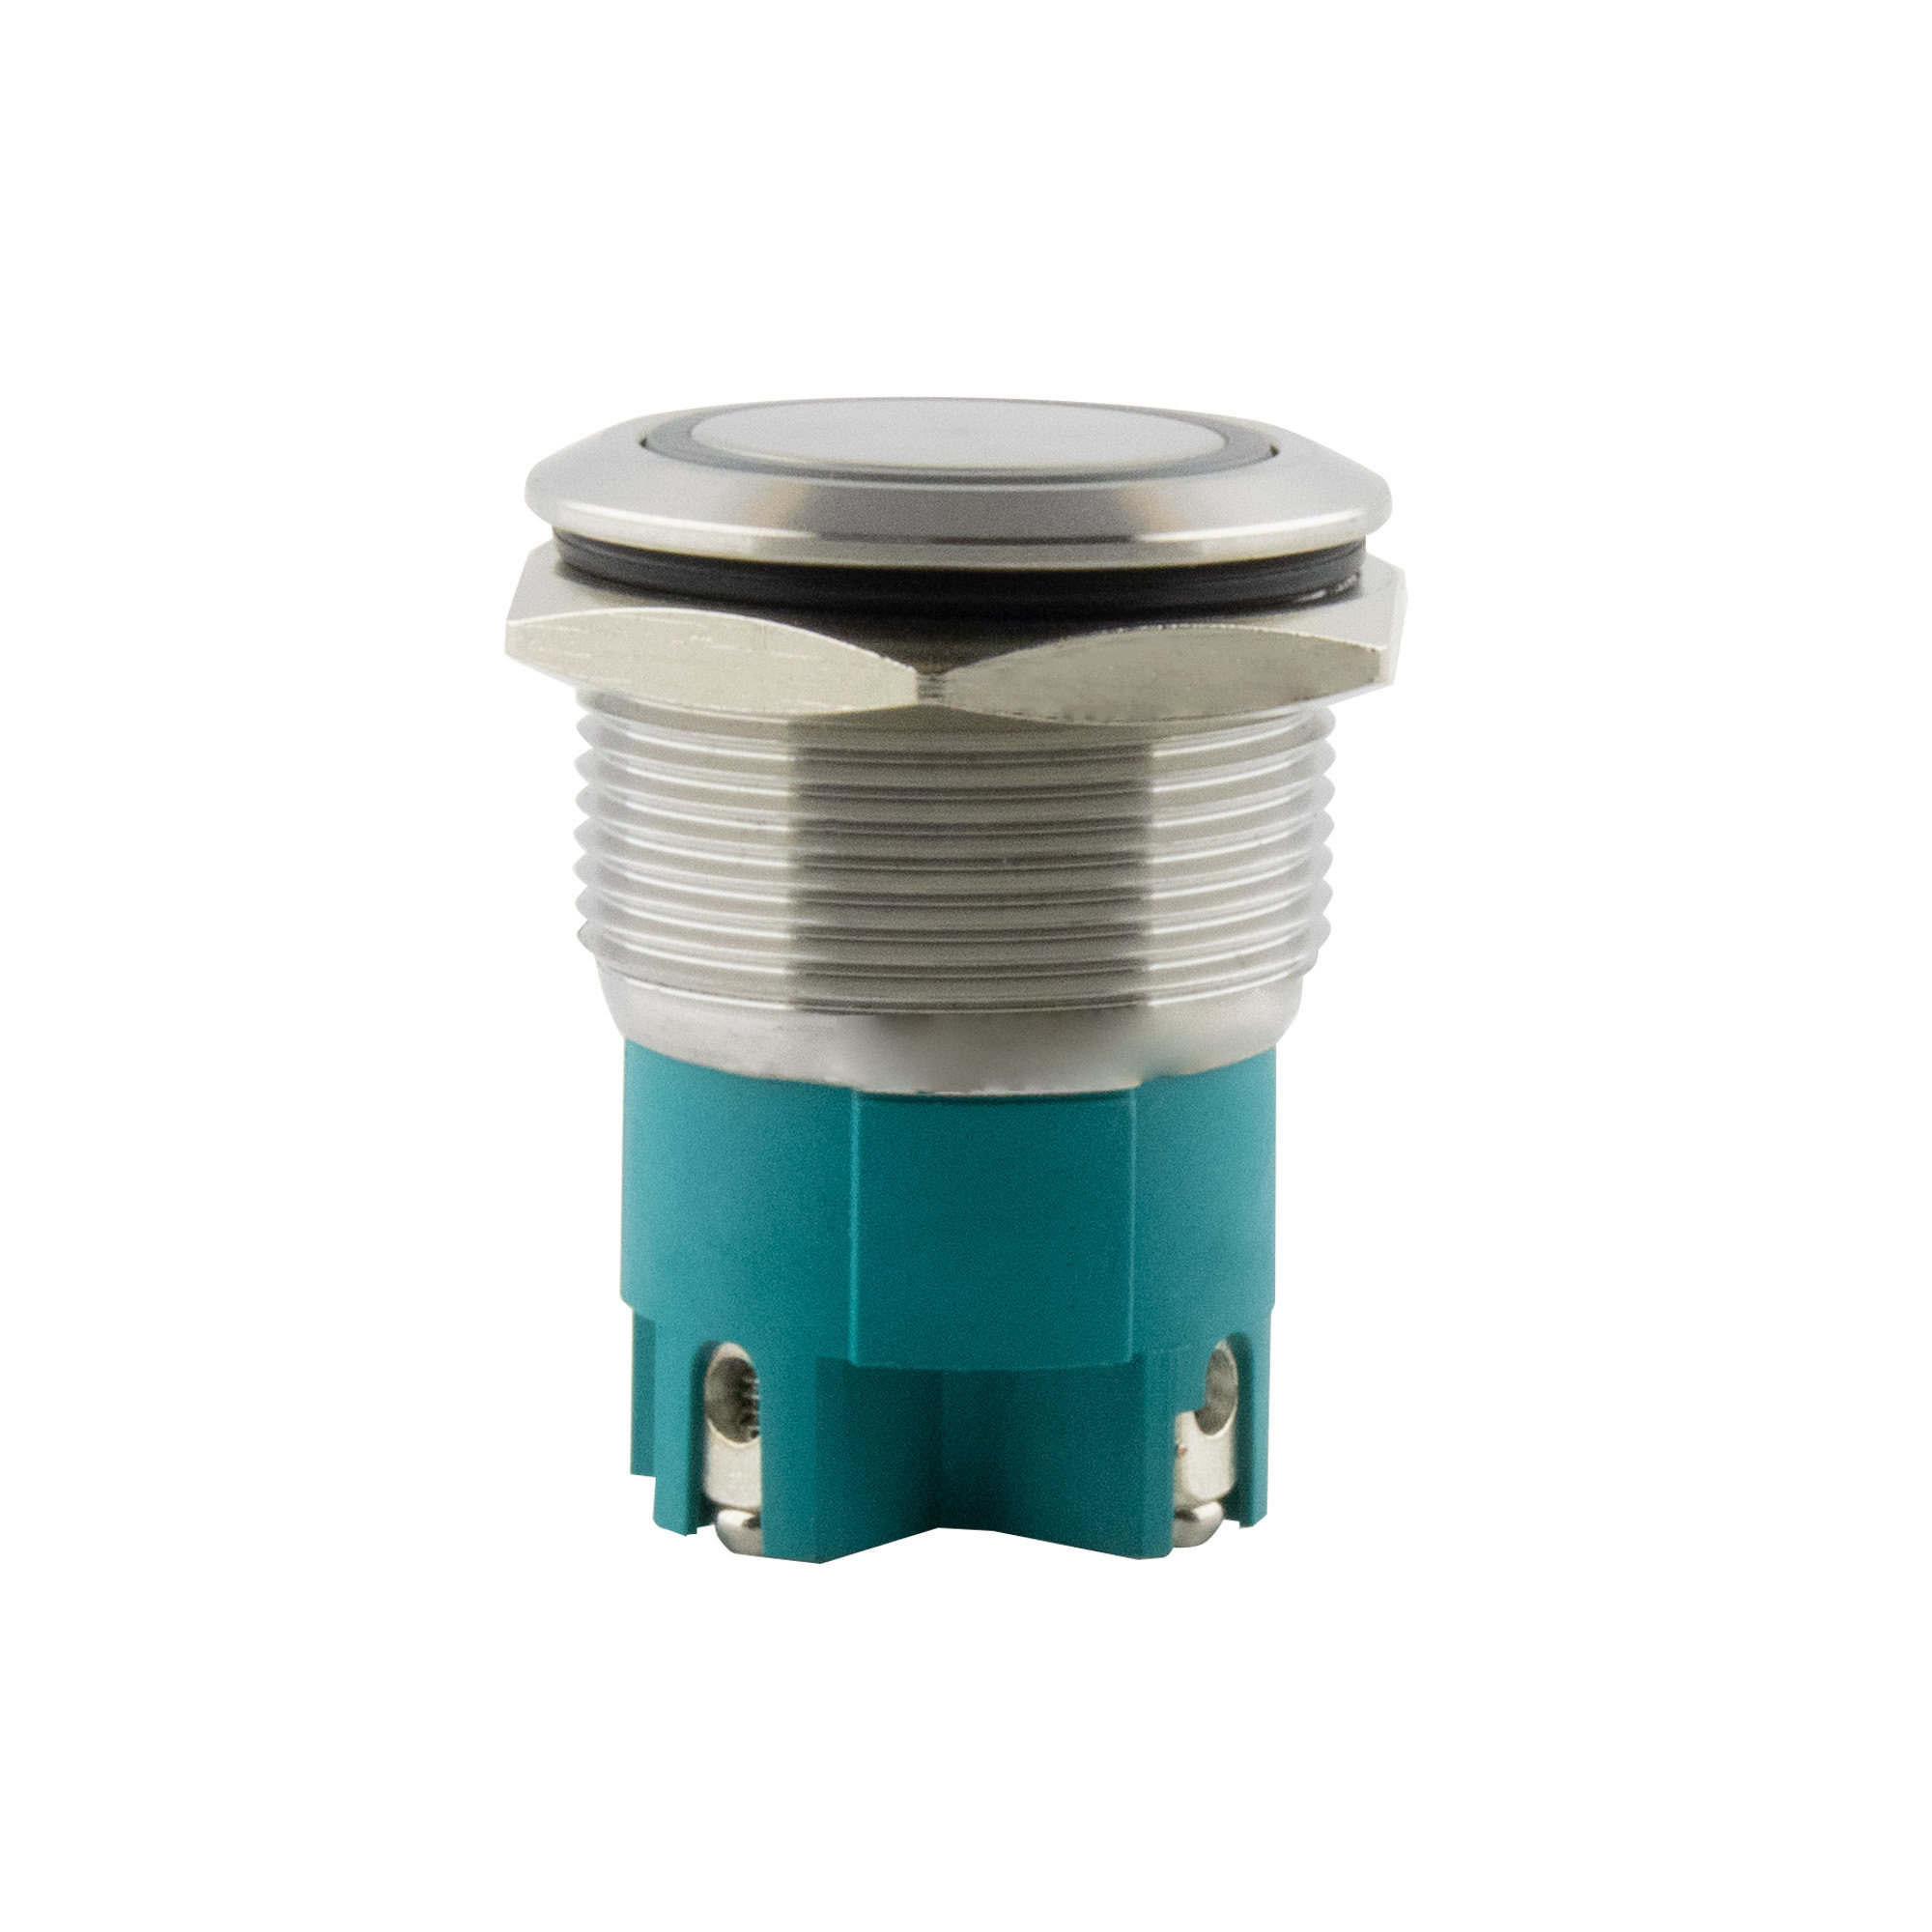 Push-button momentary Ø22mm flat LED ring green -screw